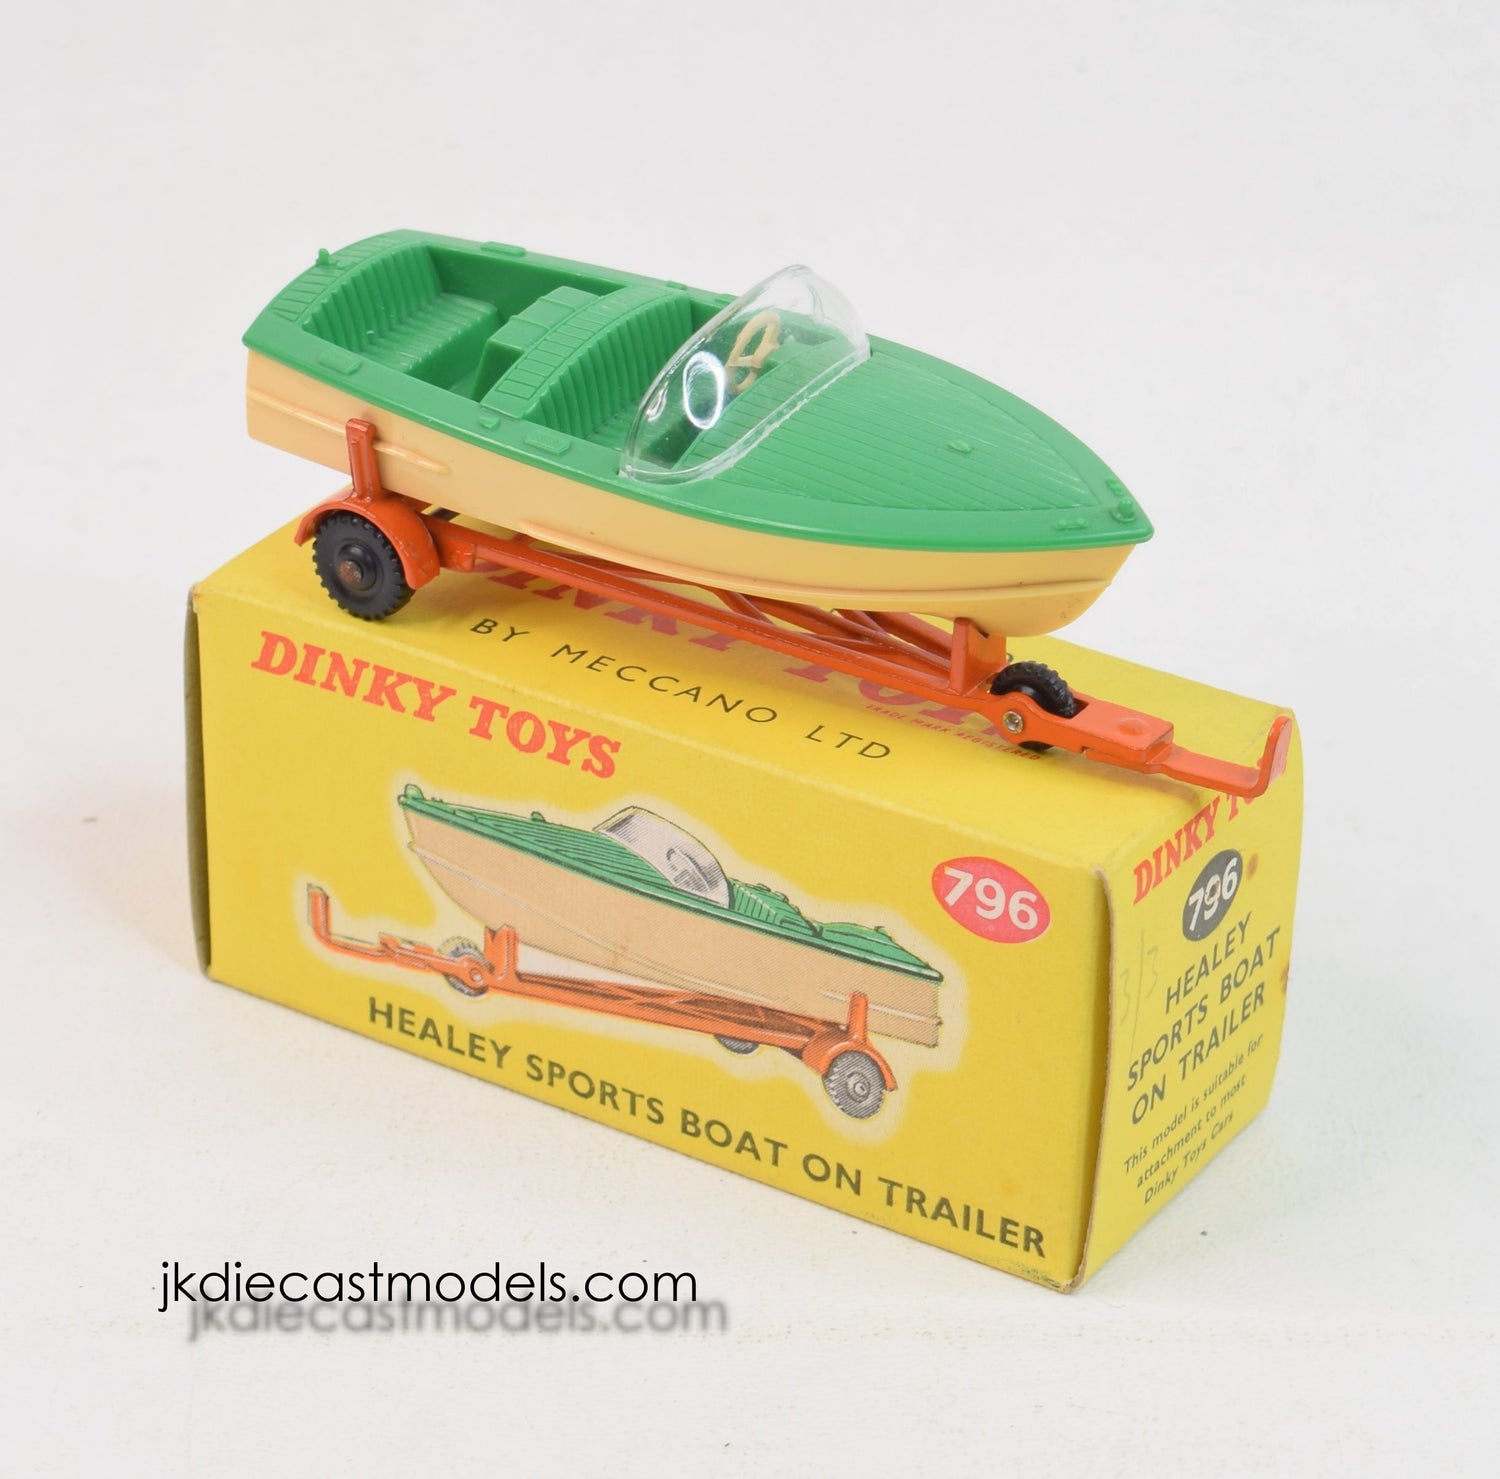 Dinky toy 796 Healey Sports Boat Mint/Lovely box